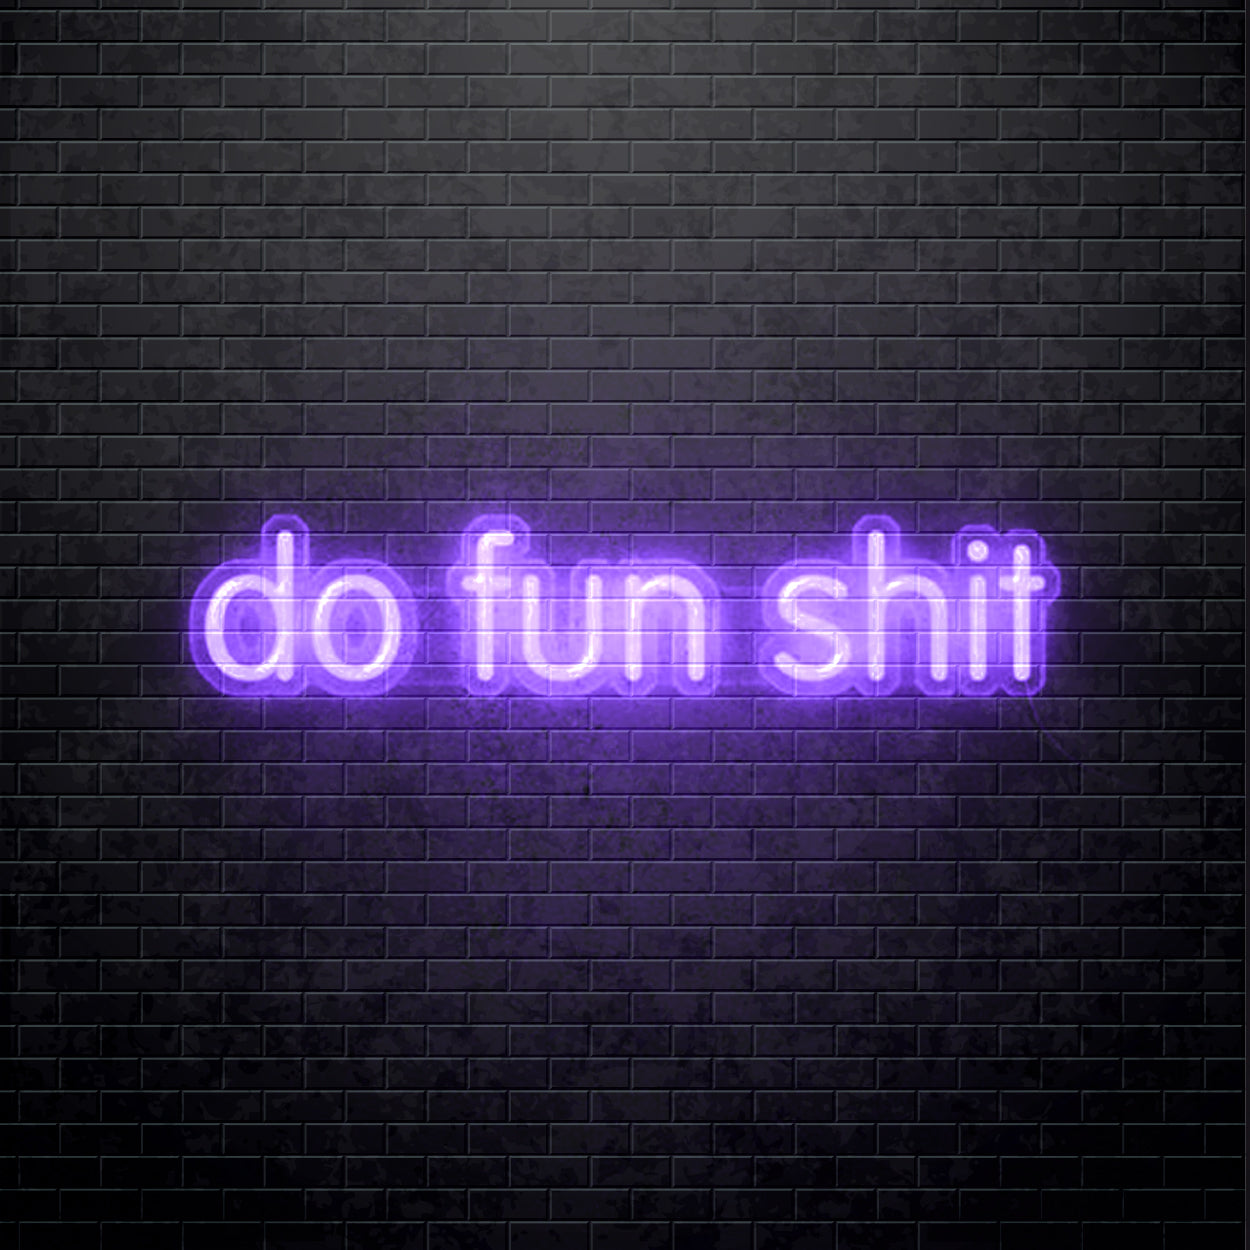 LED Neon sign - Do Fun Shit